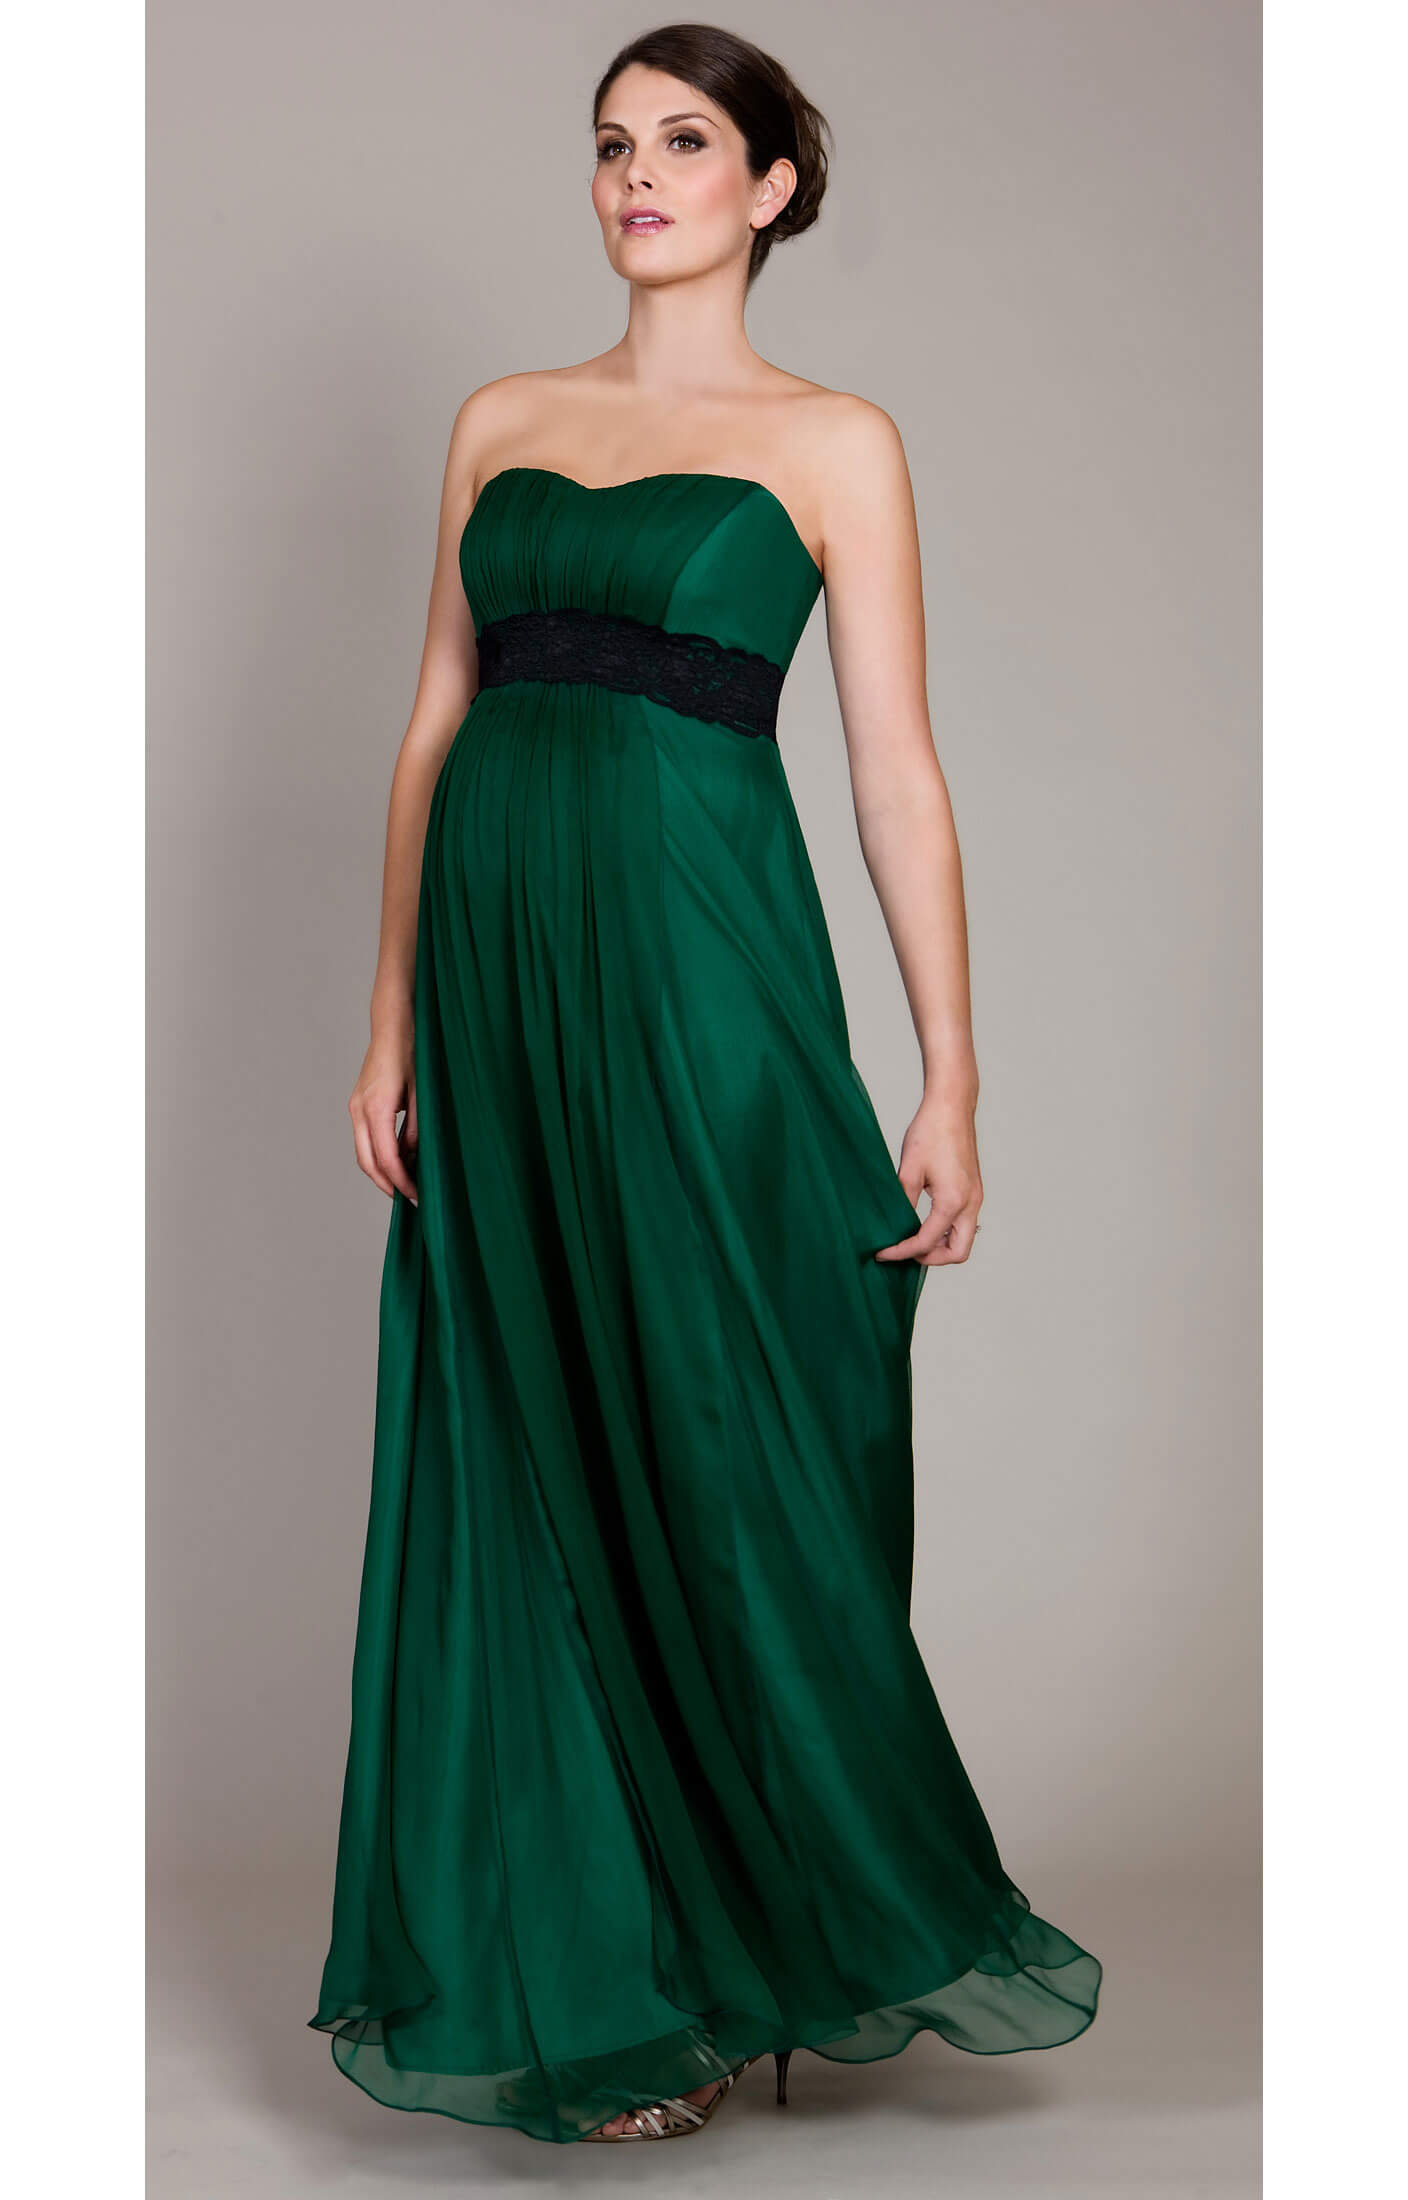 emerald green and black dress